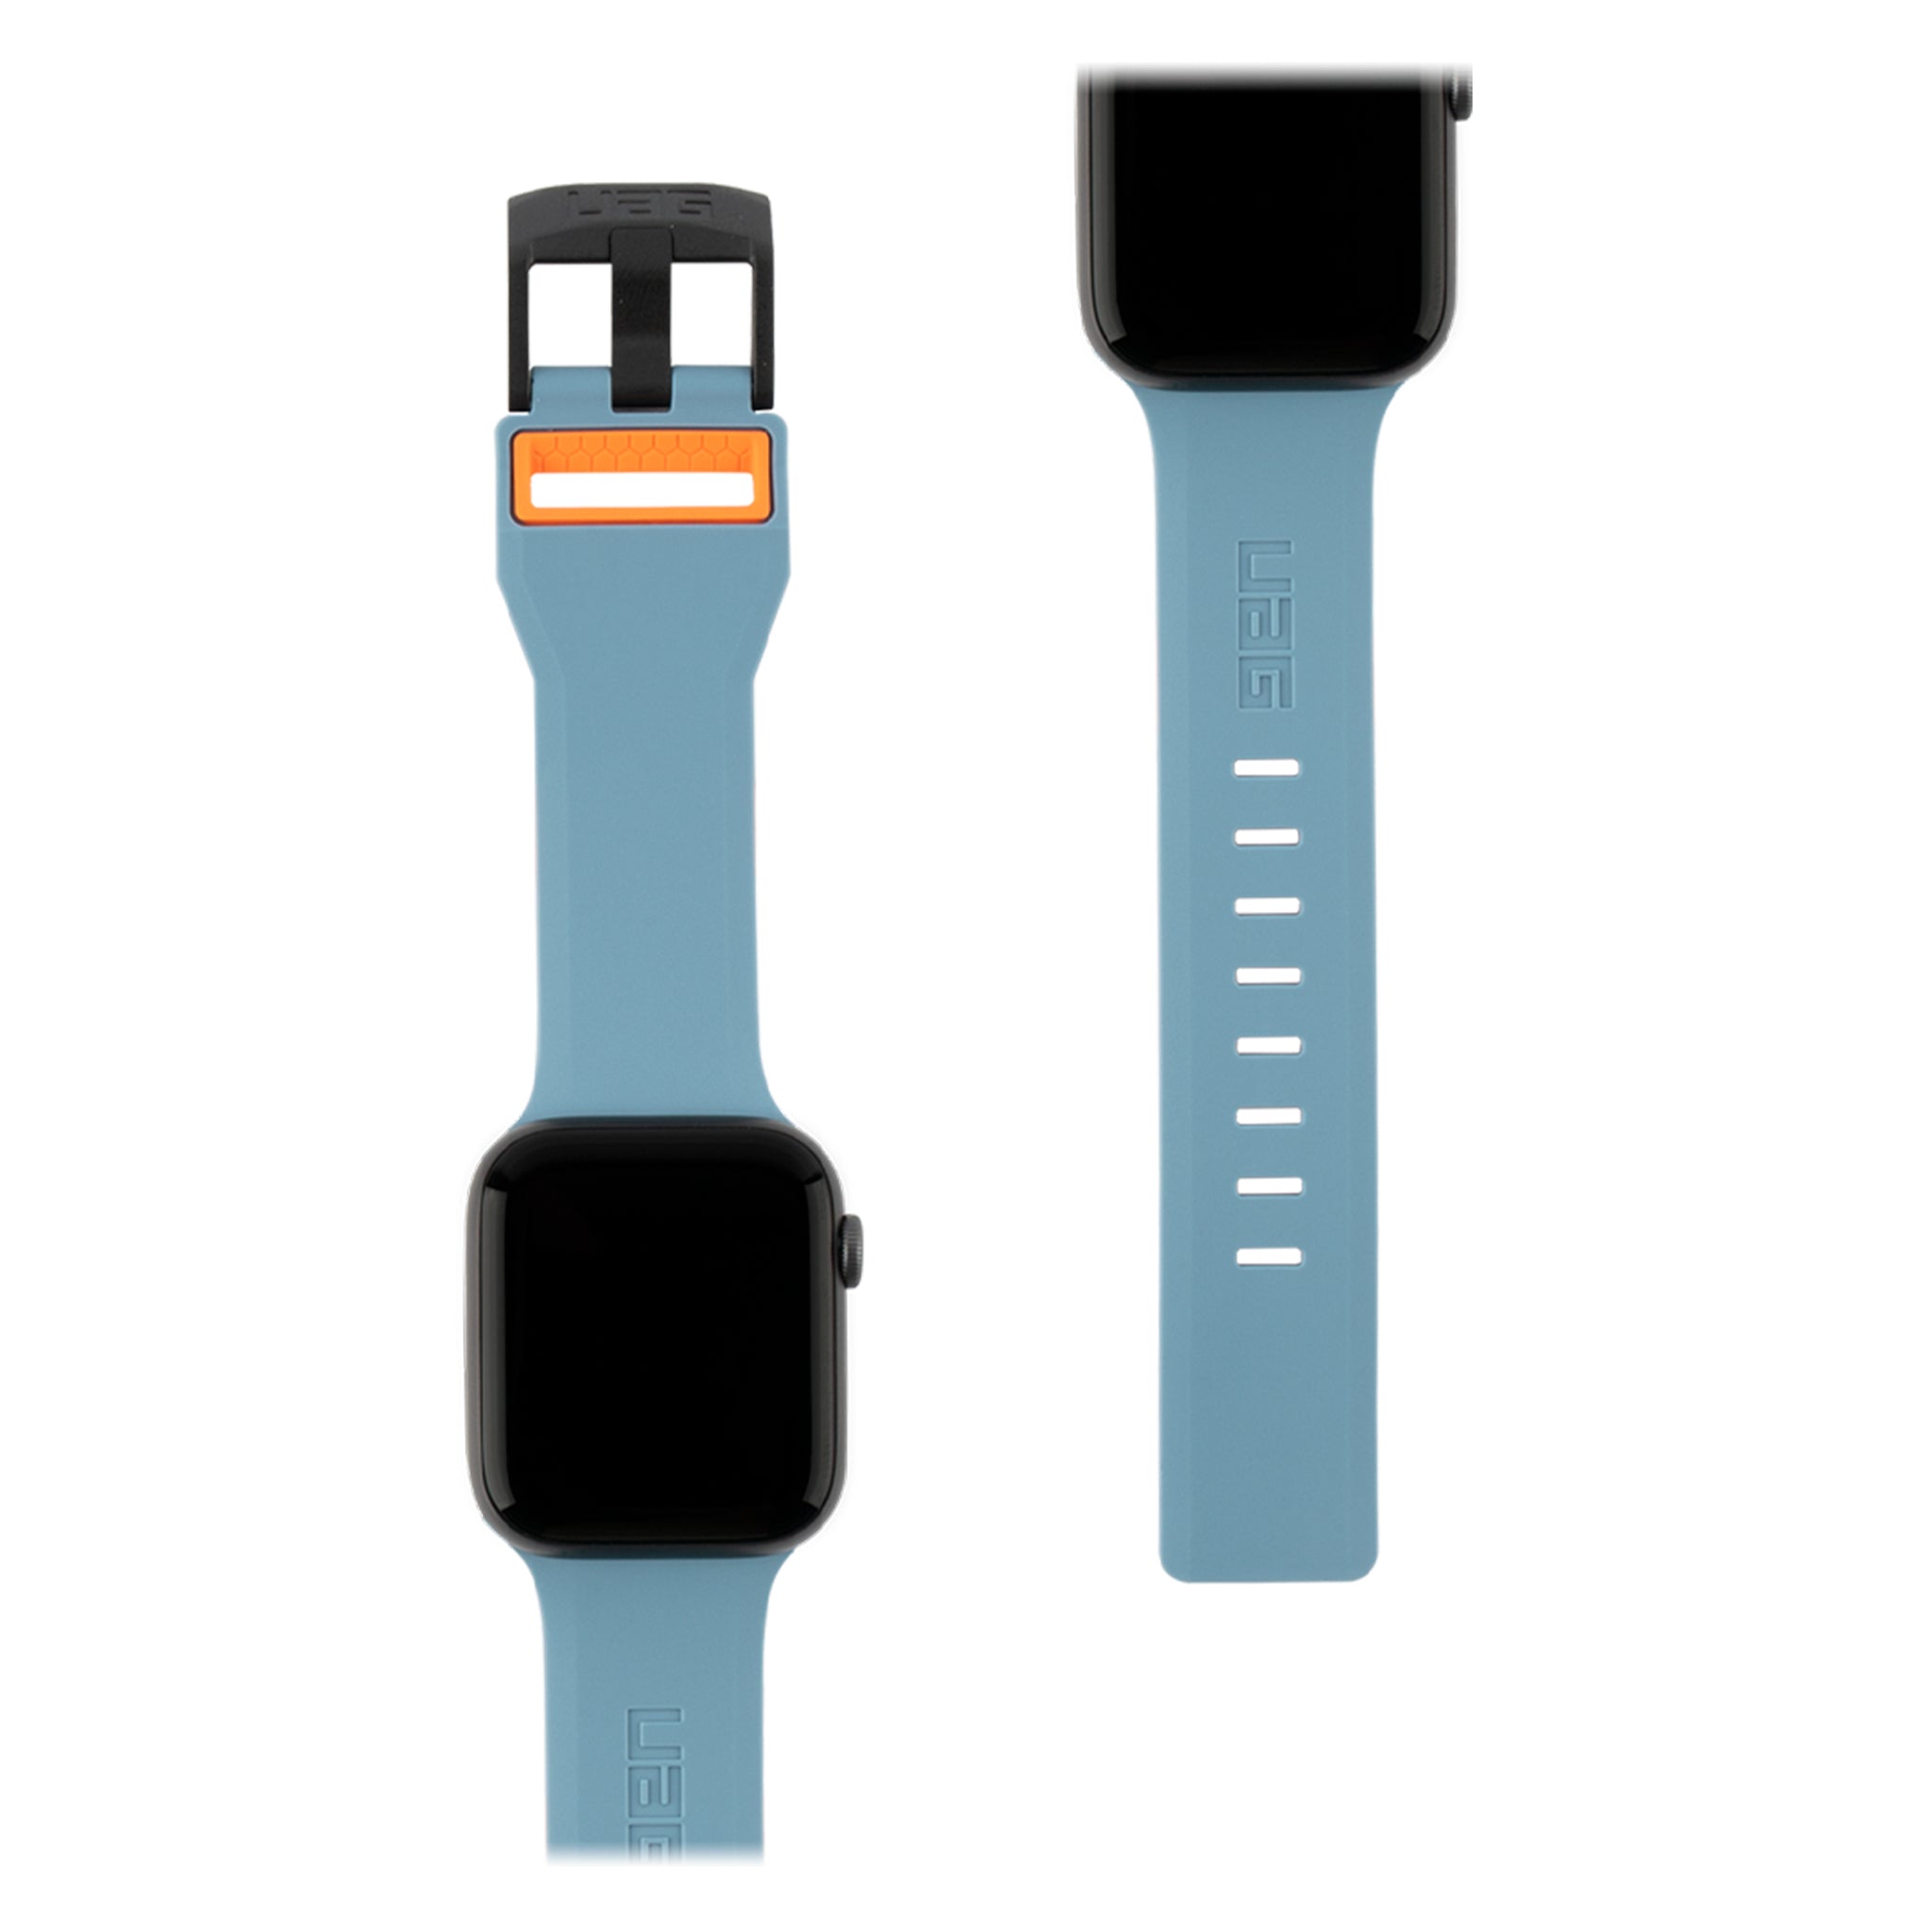 UAG - Civilian Watchband For Apple Watch 44mm - Slate And Orange